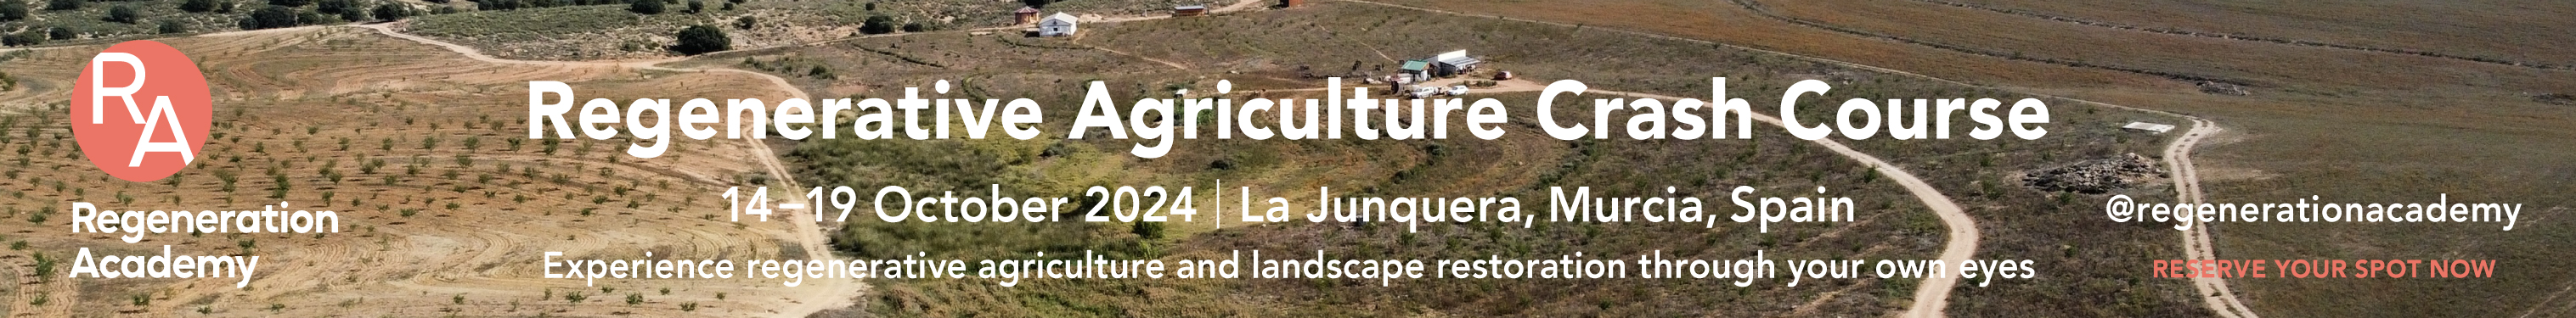 Regenerative Agriculture Crash Course - 14-19 October 2024 |La Junquera, Murcia, Spain. Experience regenerative agriculture and landscape restoration through your own eyes